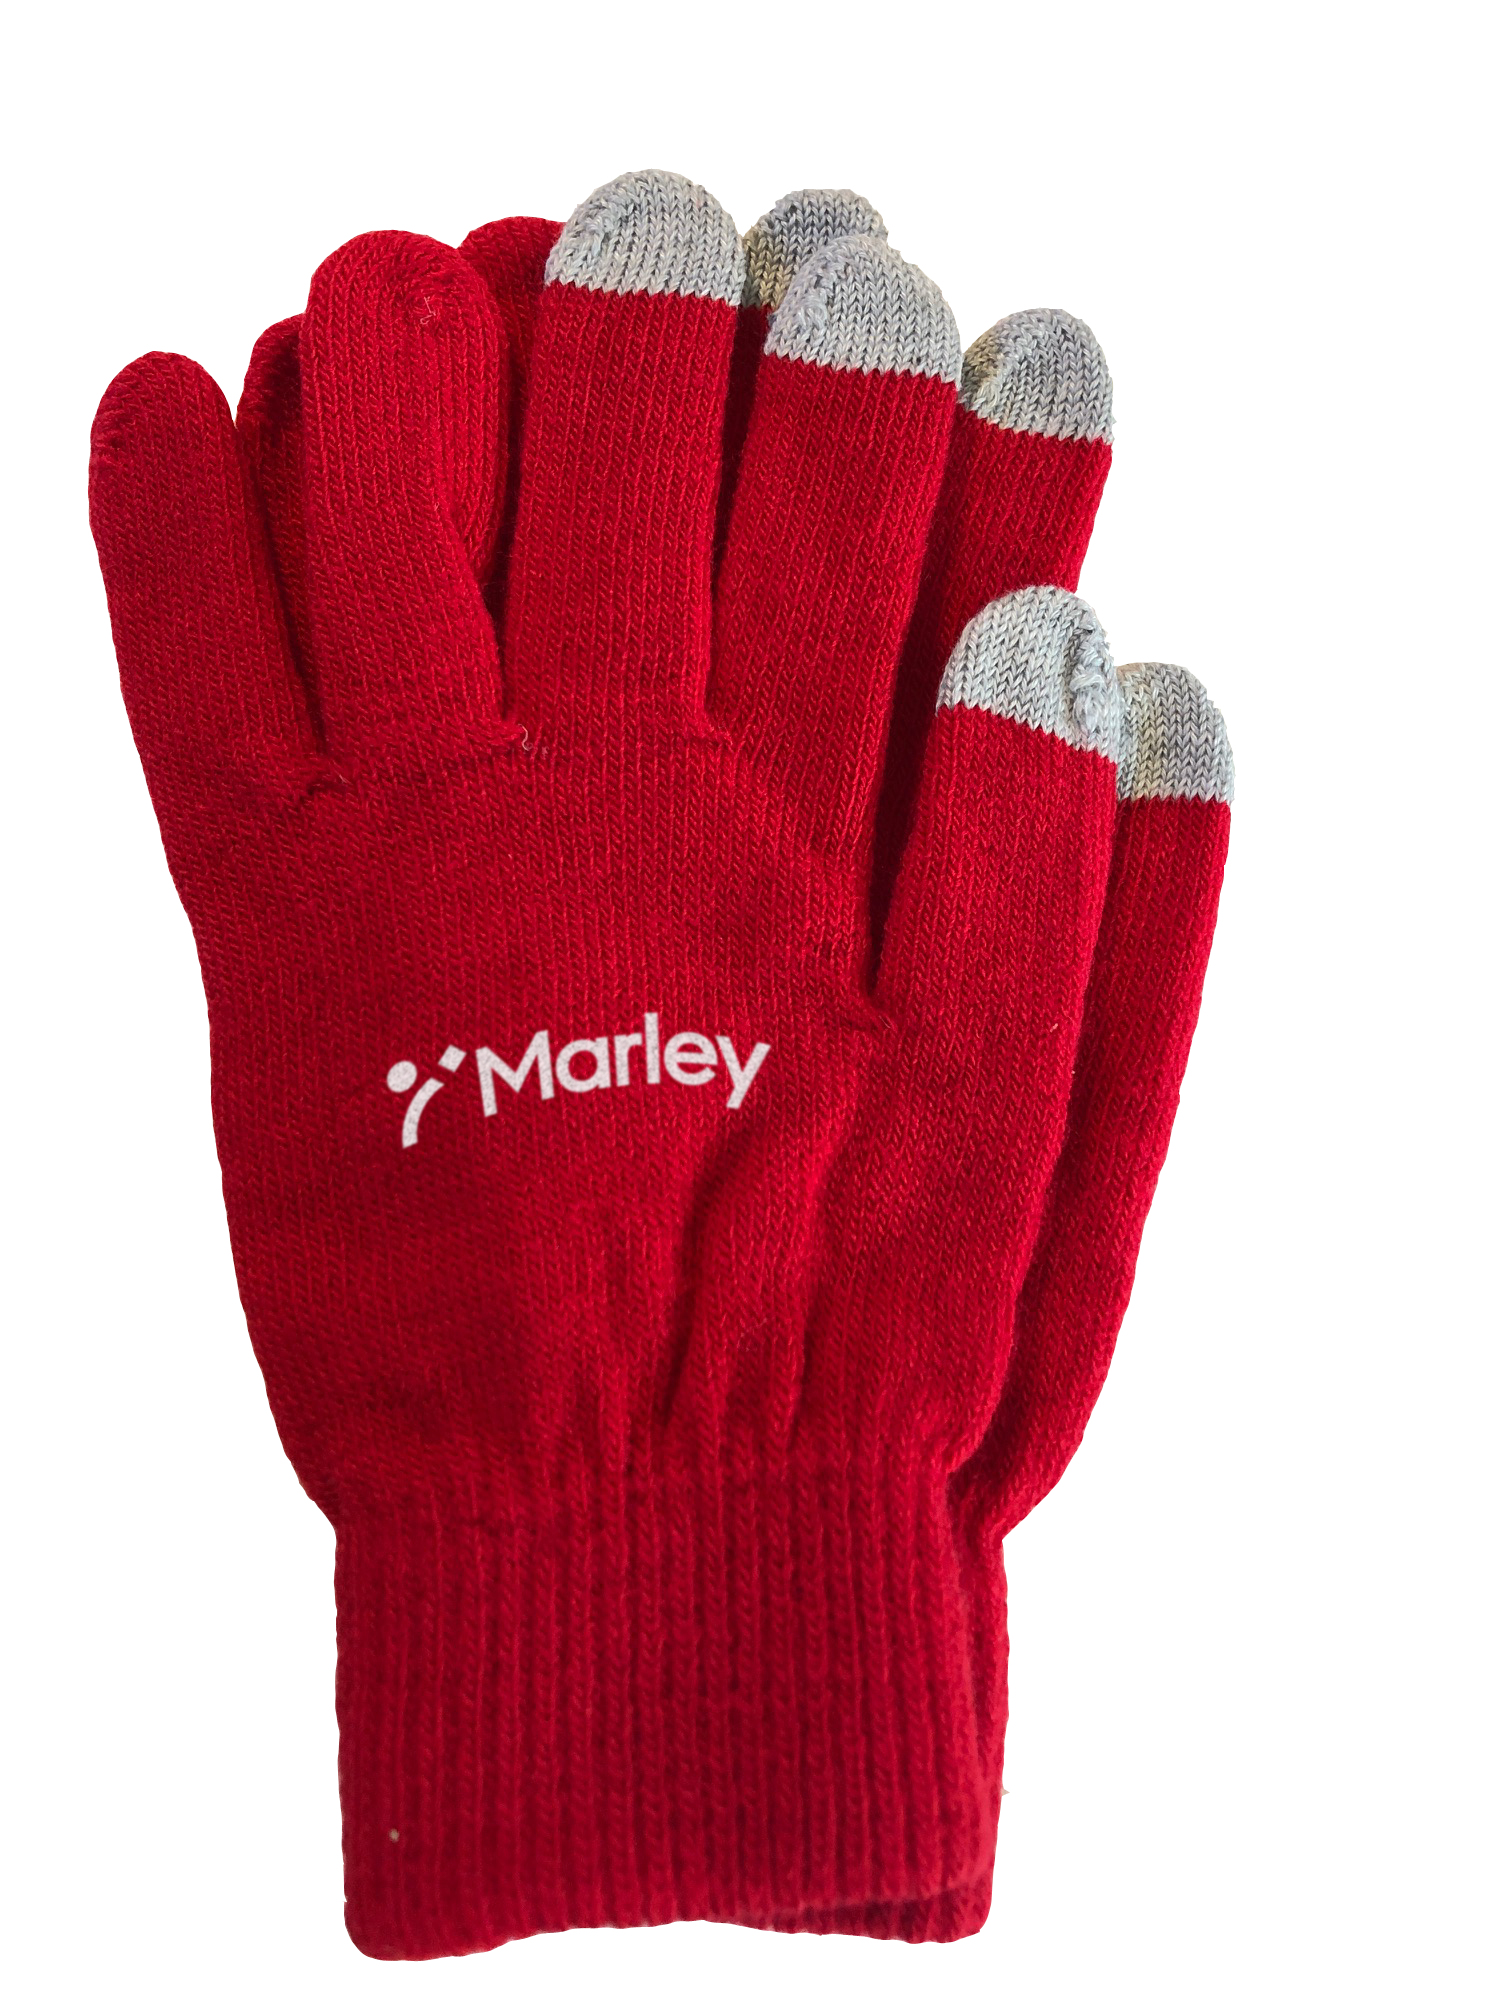 Marley sitework guide promotional gloves